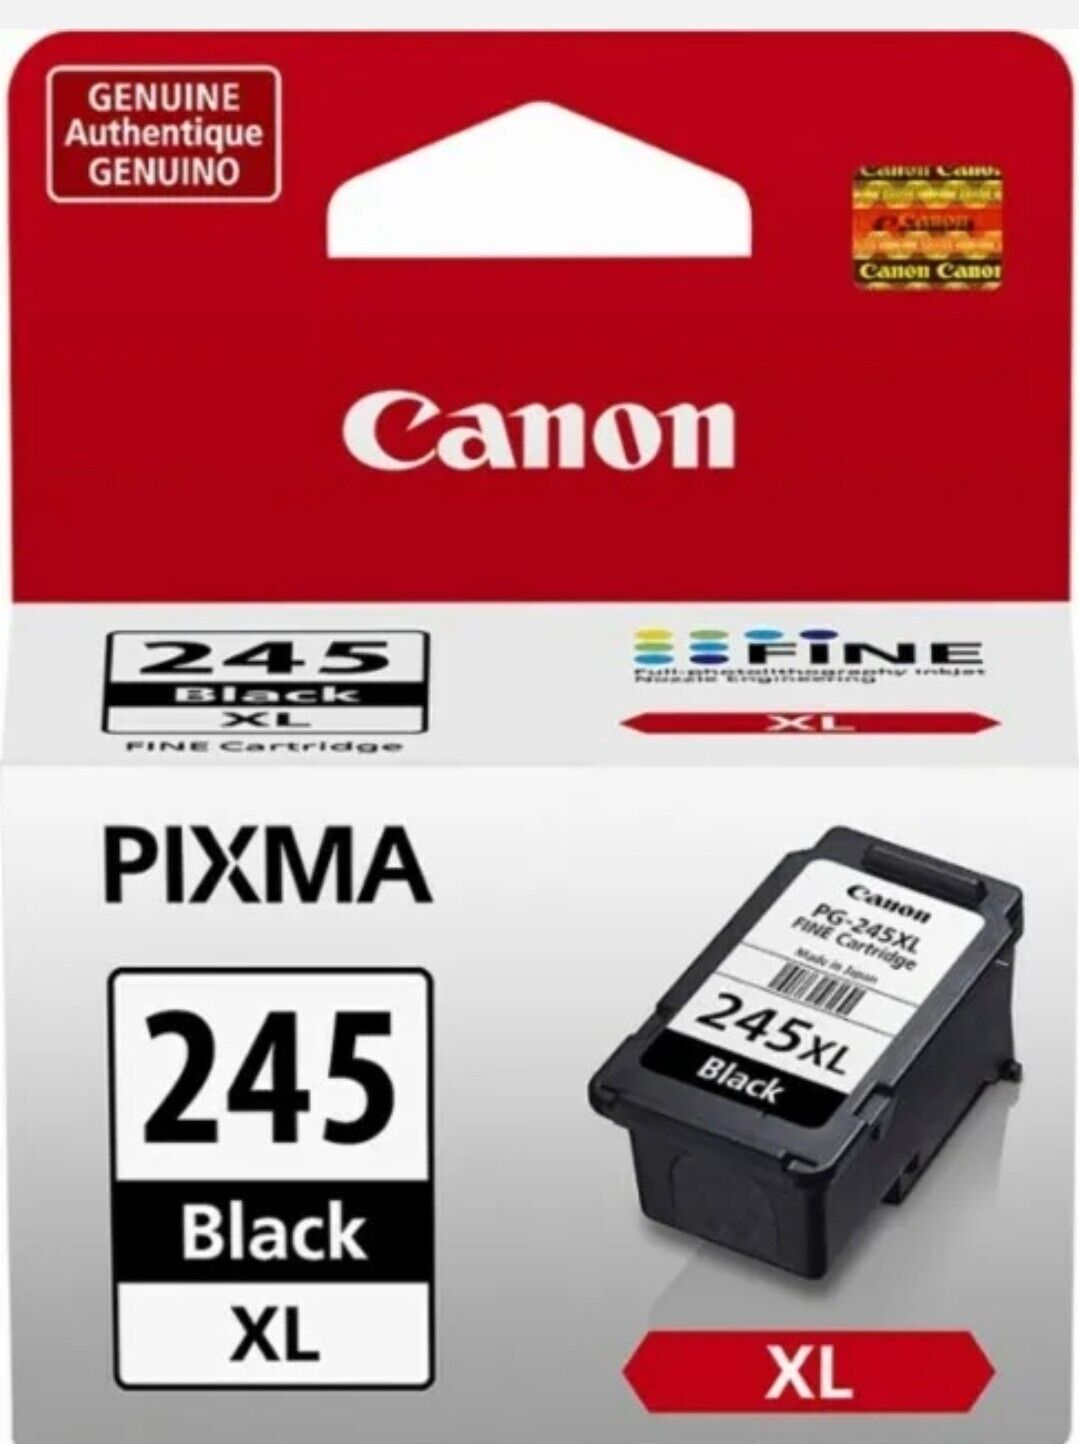 Canon Pixma PG-245XL Black Ink Cartridge Brand New unopened OEM box 